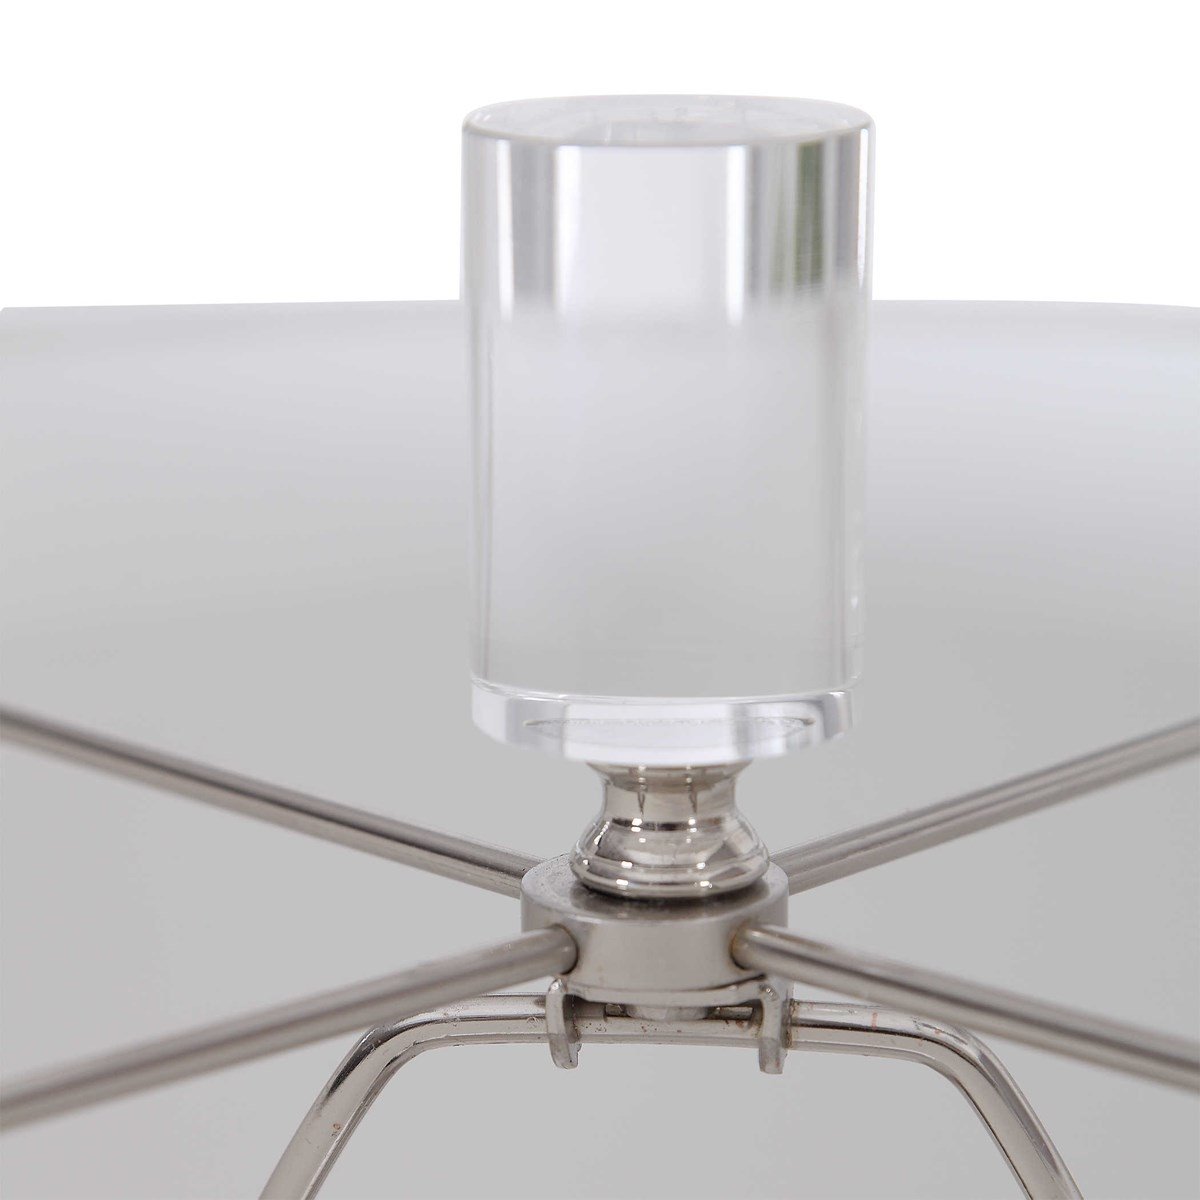 ZESIRO TABLE LAMP - Image 2